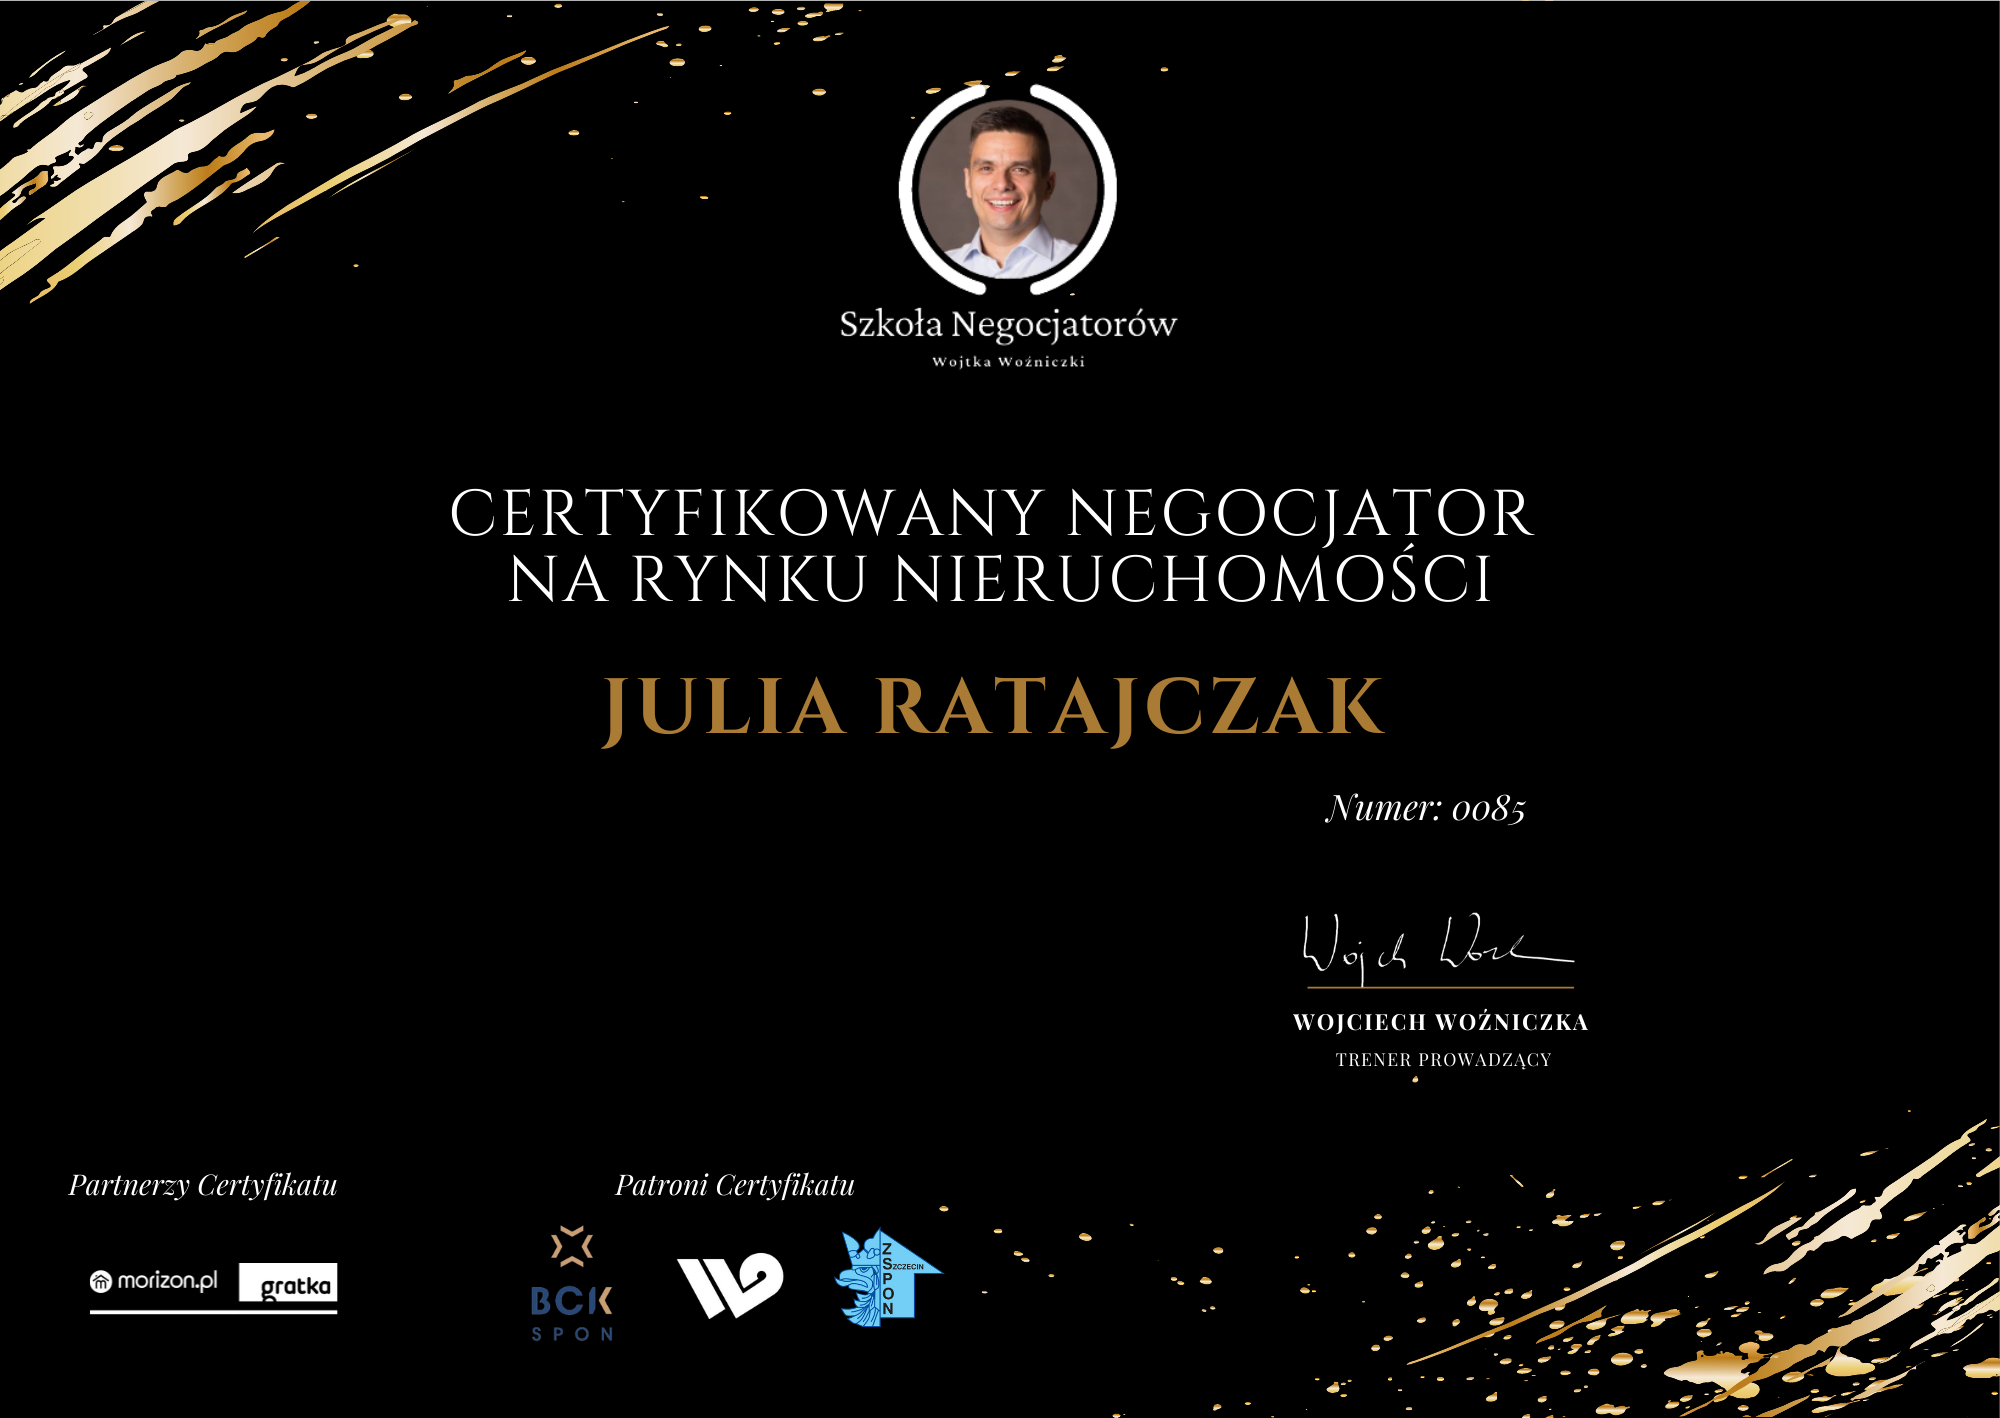 Julia Ratajczak - Certyfikowany Negocjator